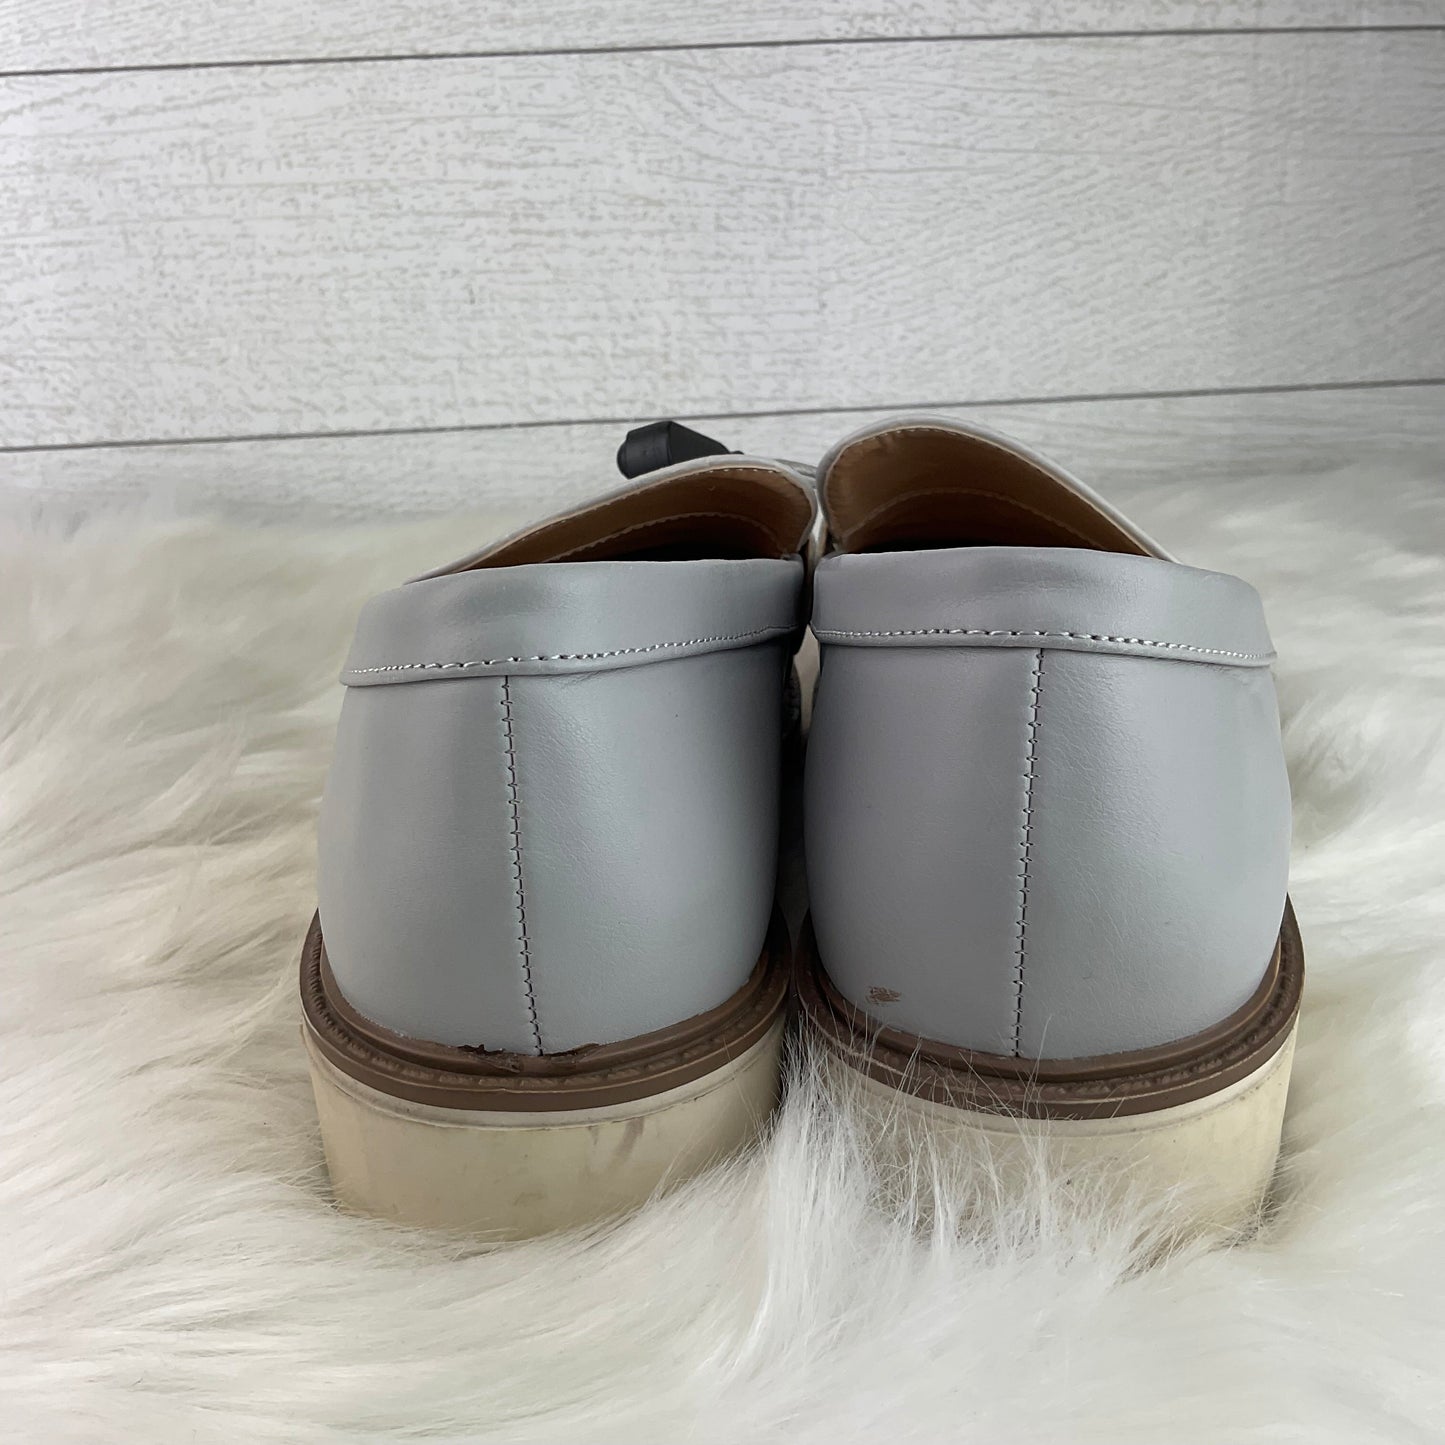 Grey Shoes Flats Cme, Size 9.5